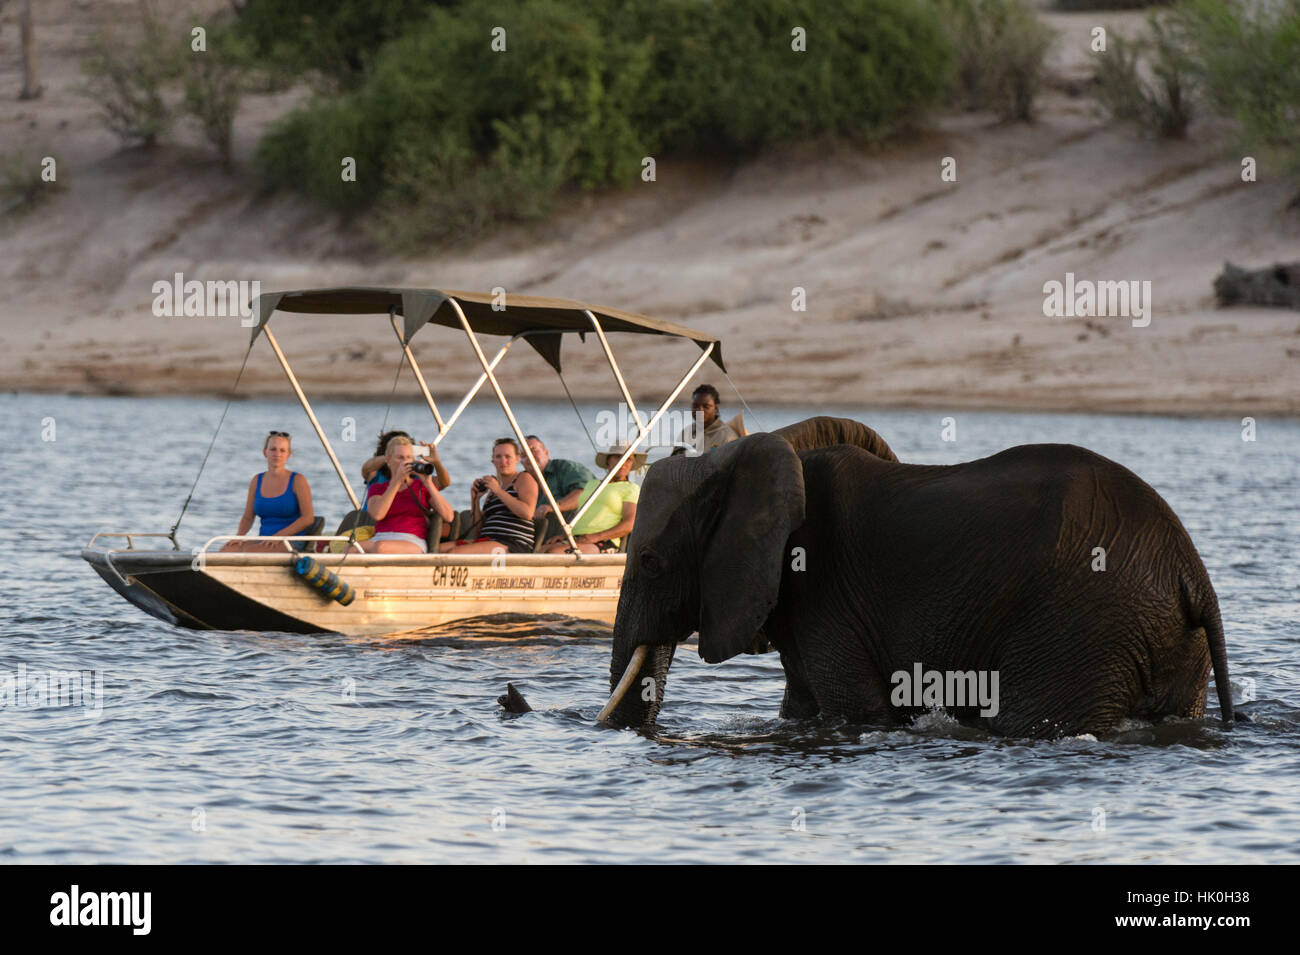 Touristischen beobachten einen afrikanischen Elefanten (Loxodonta Africana), überqueren den Fluss Chobe, Chobe Nationalpark, Botswana Stockfoto